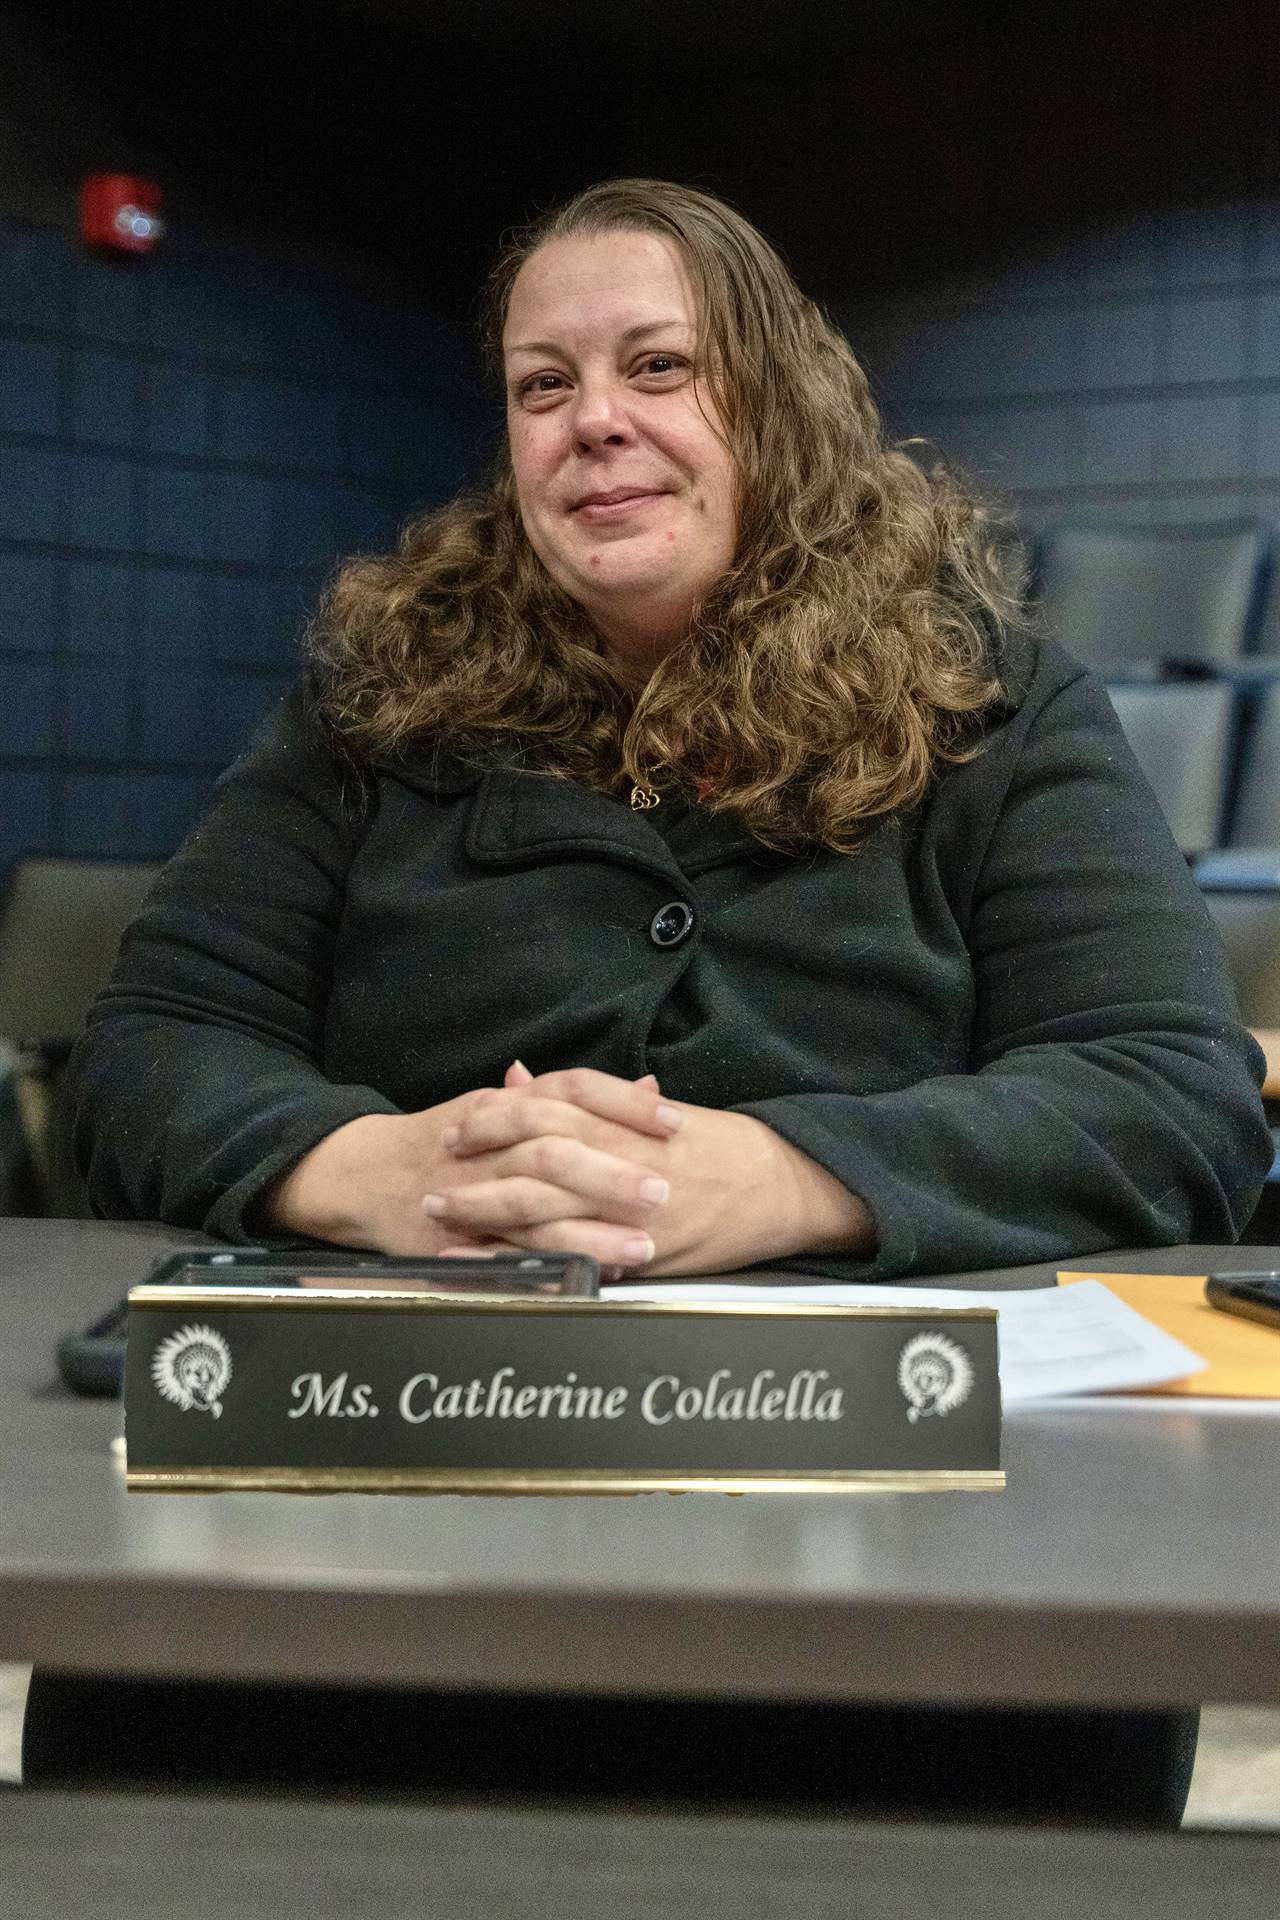 Ms. Catherine Colalella - ccolalella@goquips.org